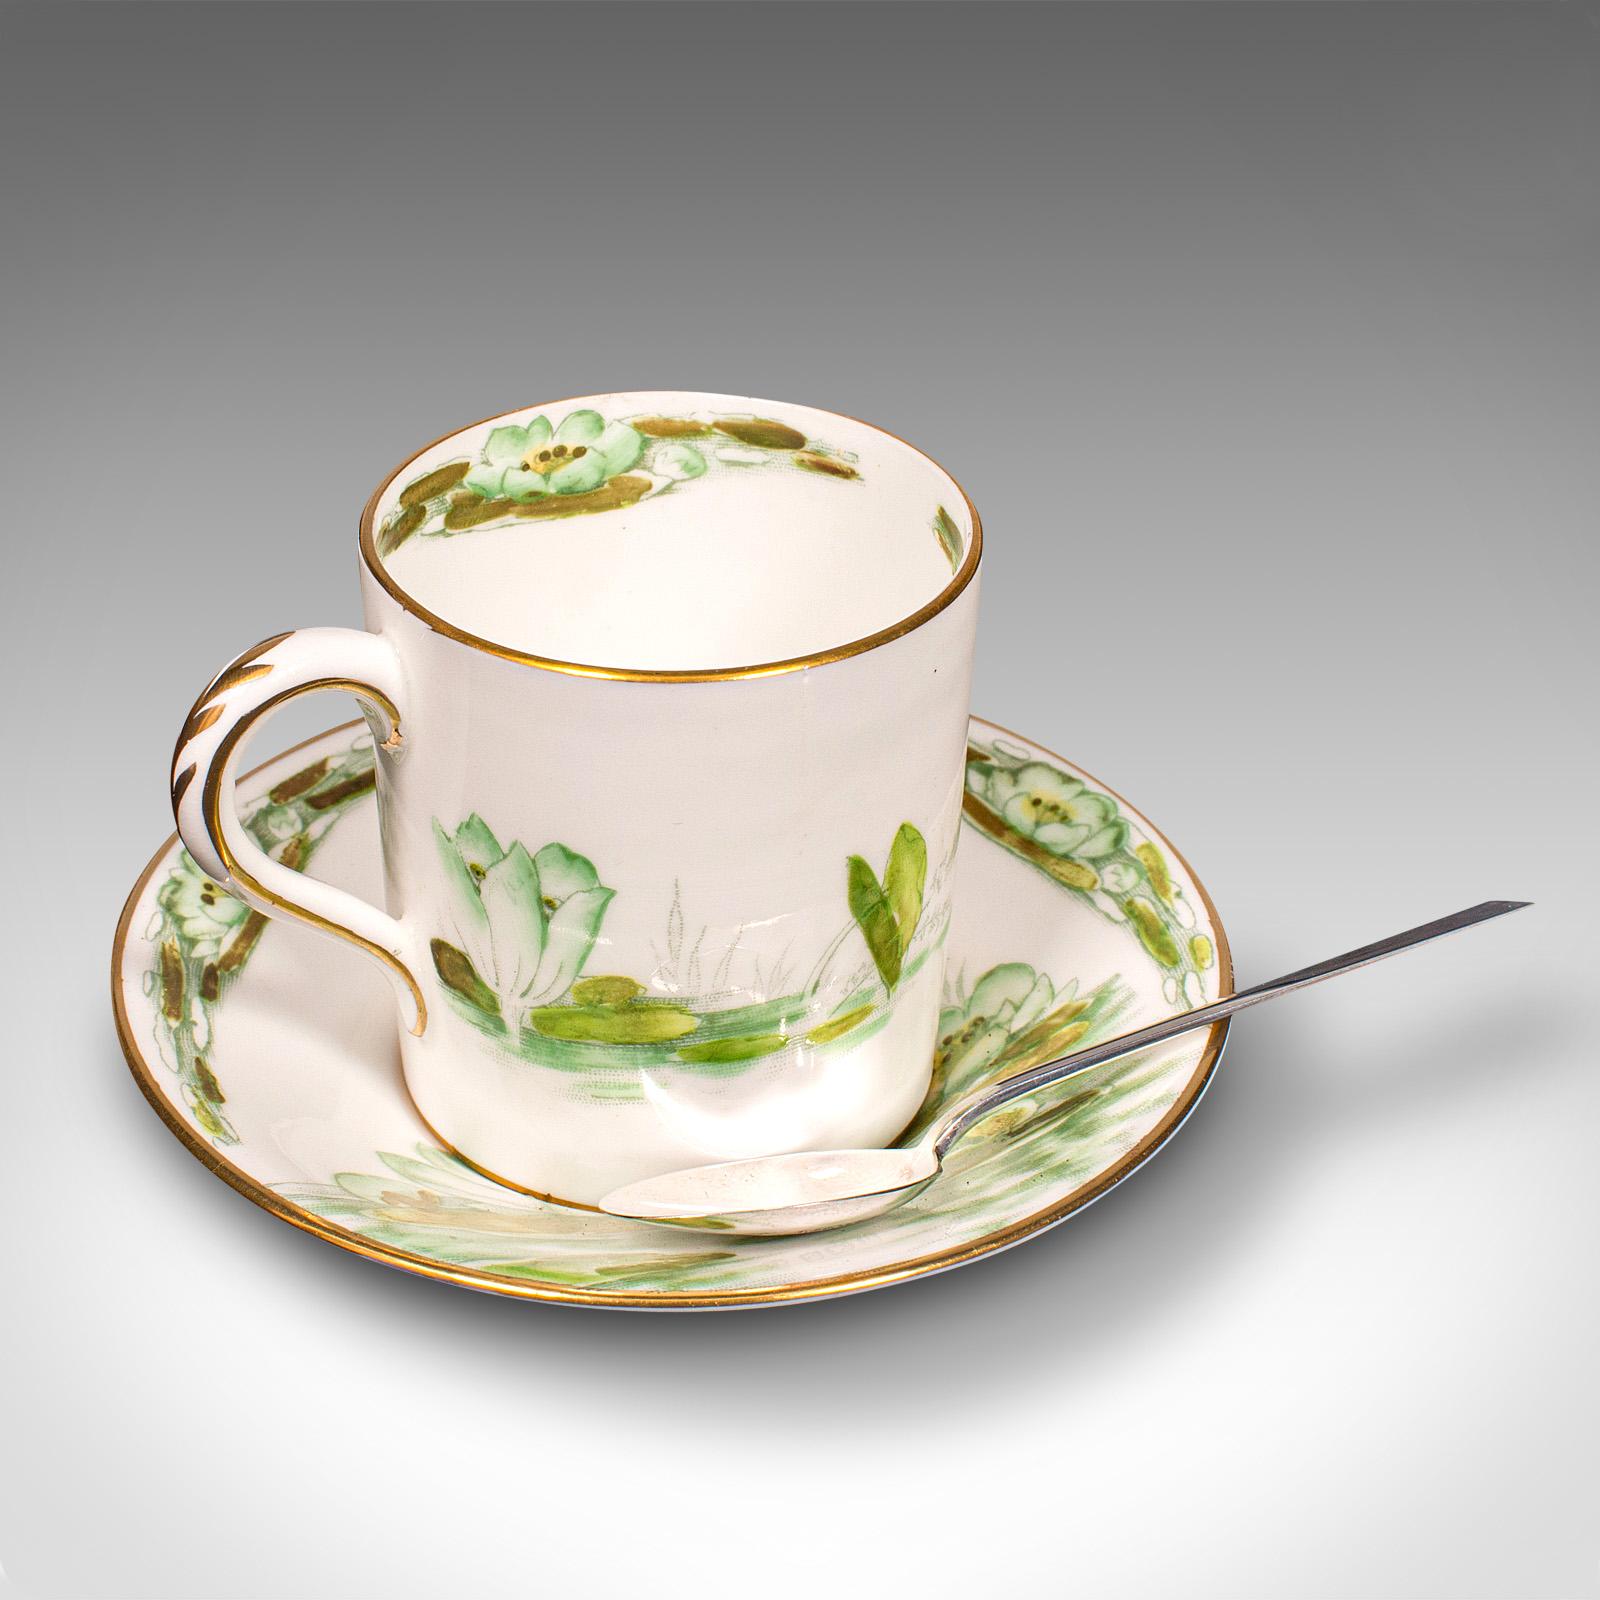 Vintage Cased Tea Set, English Ceramic, Coffee Cans, Silver Spoon, Hallmark 1932 For Sale 4